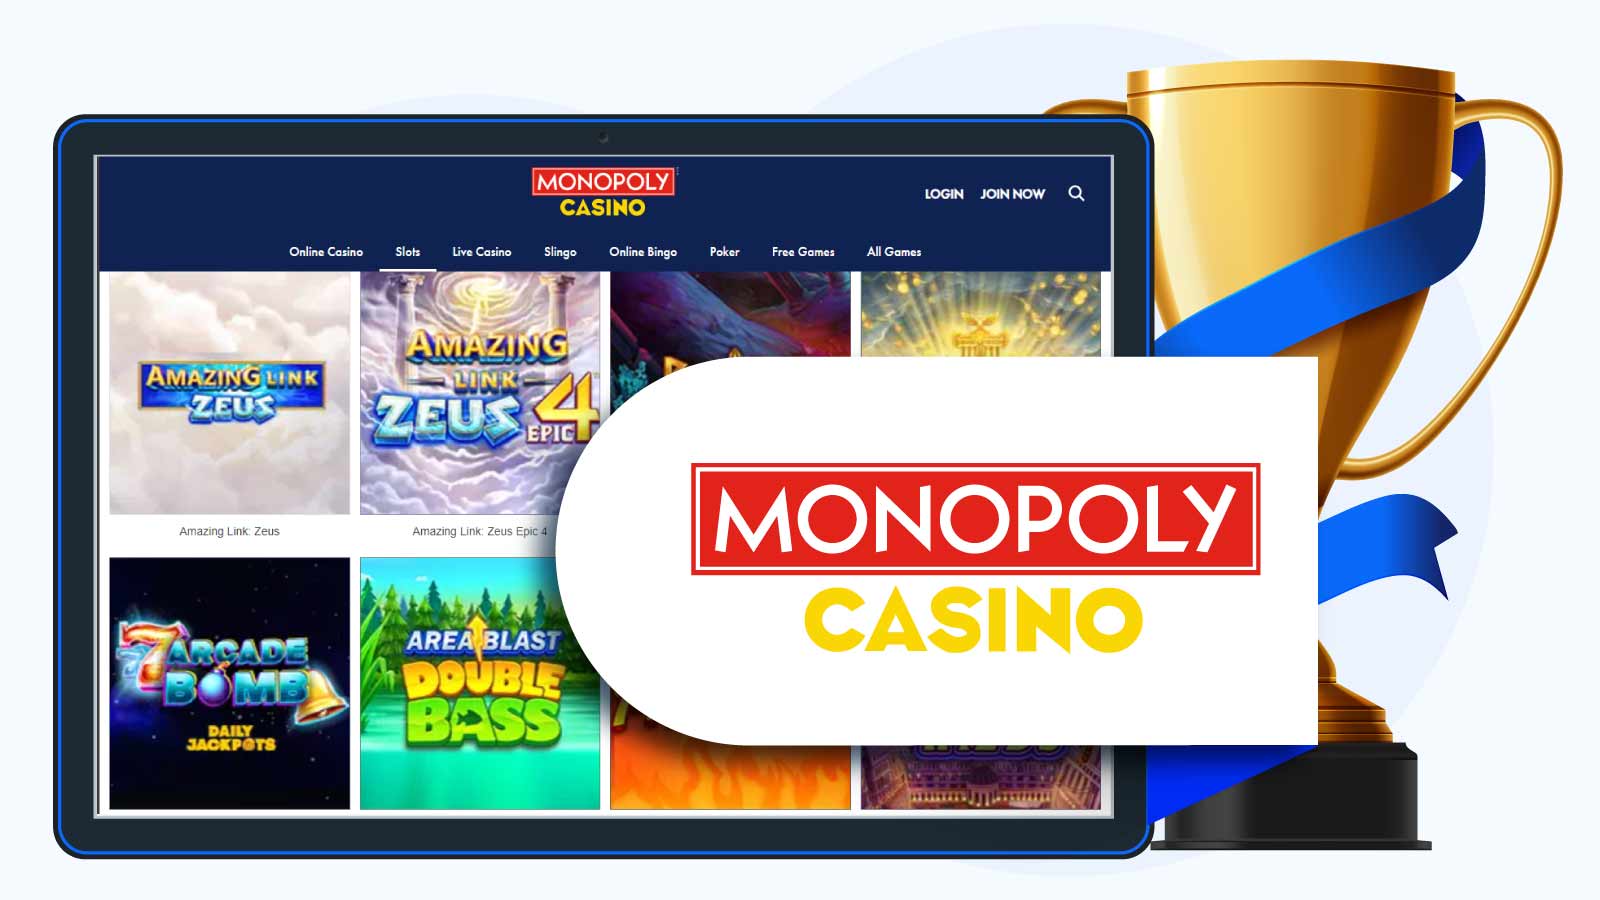 The Best Deposit £5 Casino in the UK Monopoly Casino